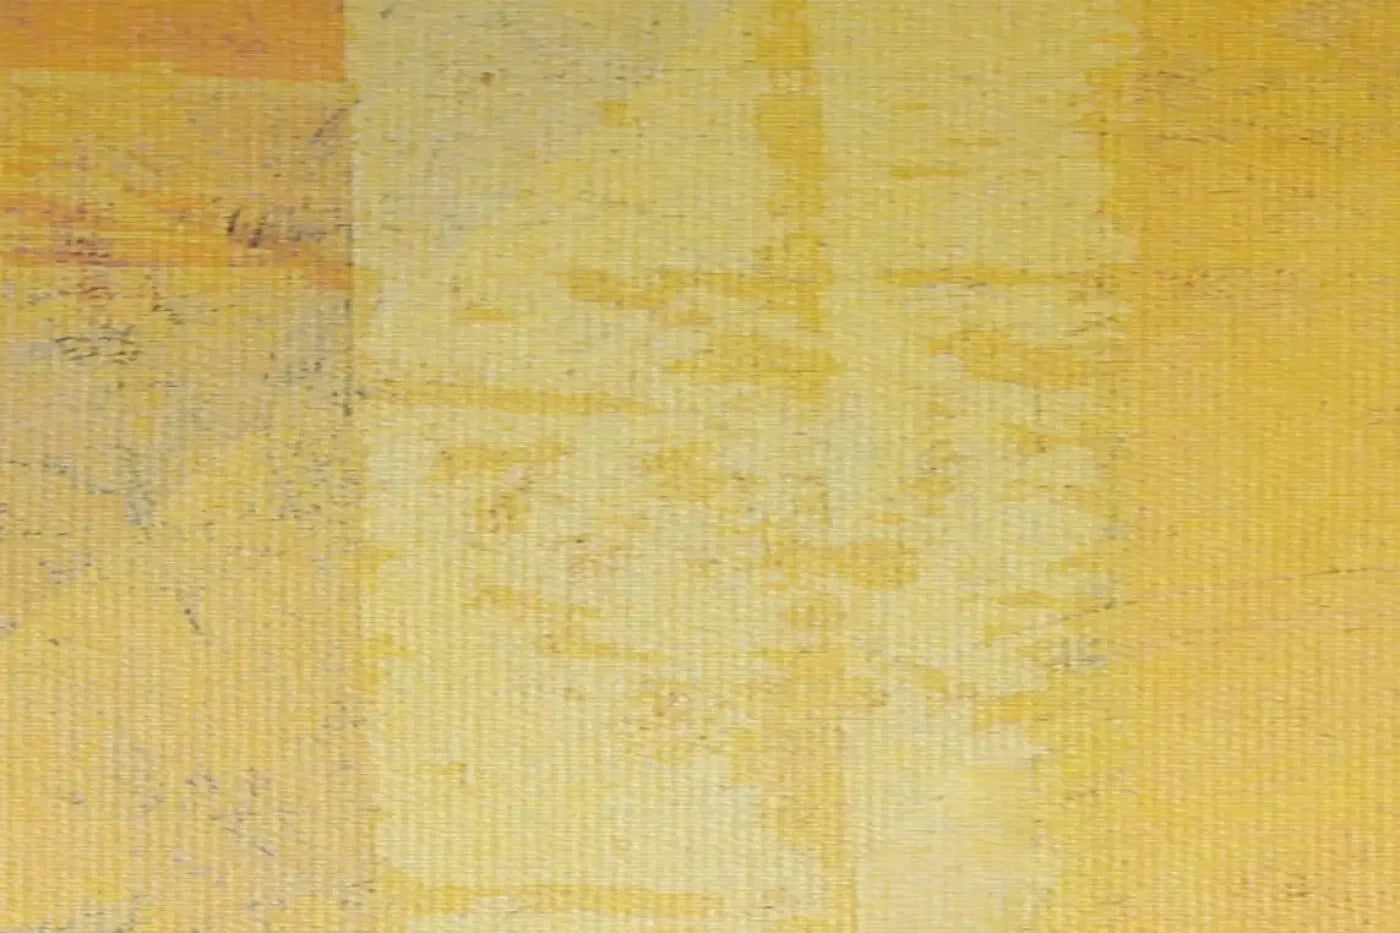 Banana 5X4 Rubbermat Floor ( 60 X 48 Inch ) Backdrop